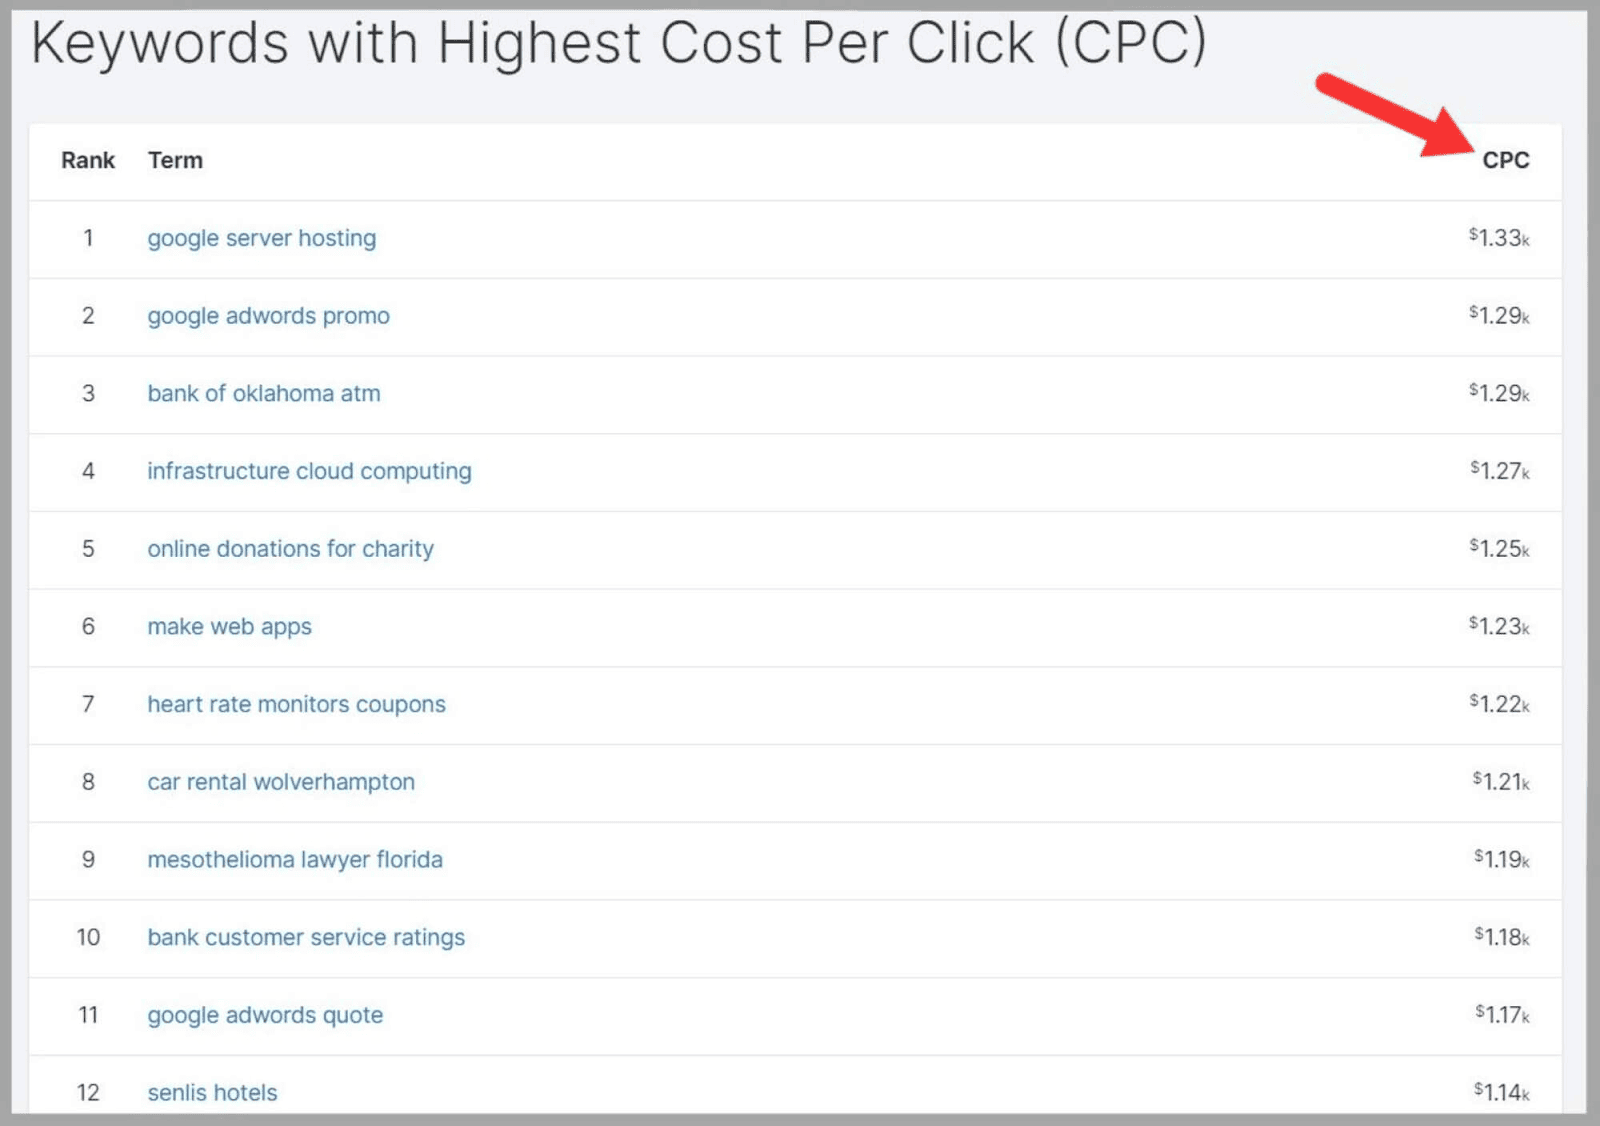 Keywords with highest cost per click (CPC)